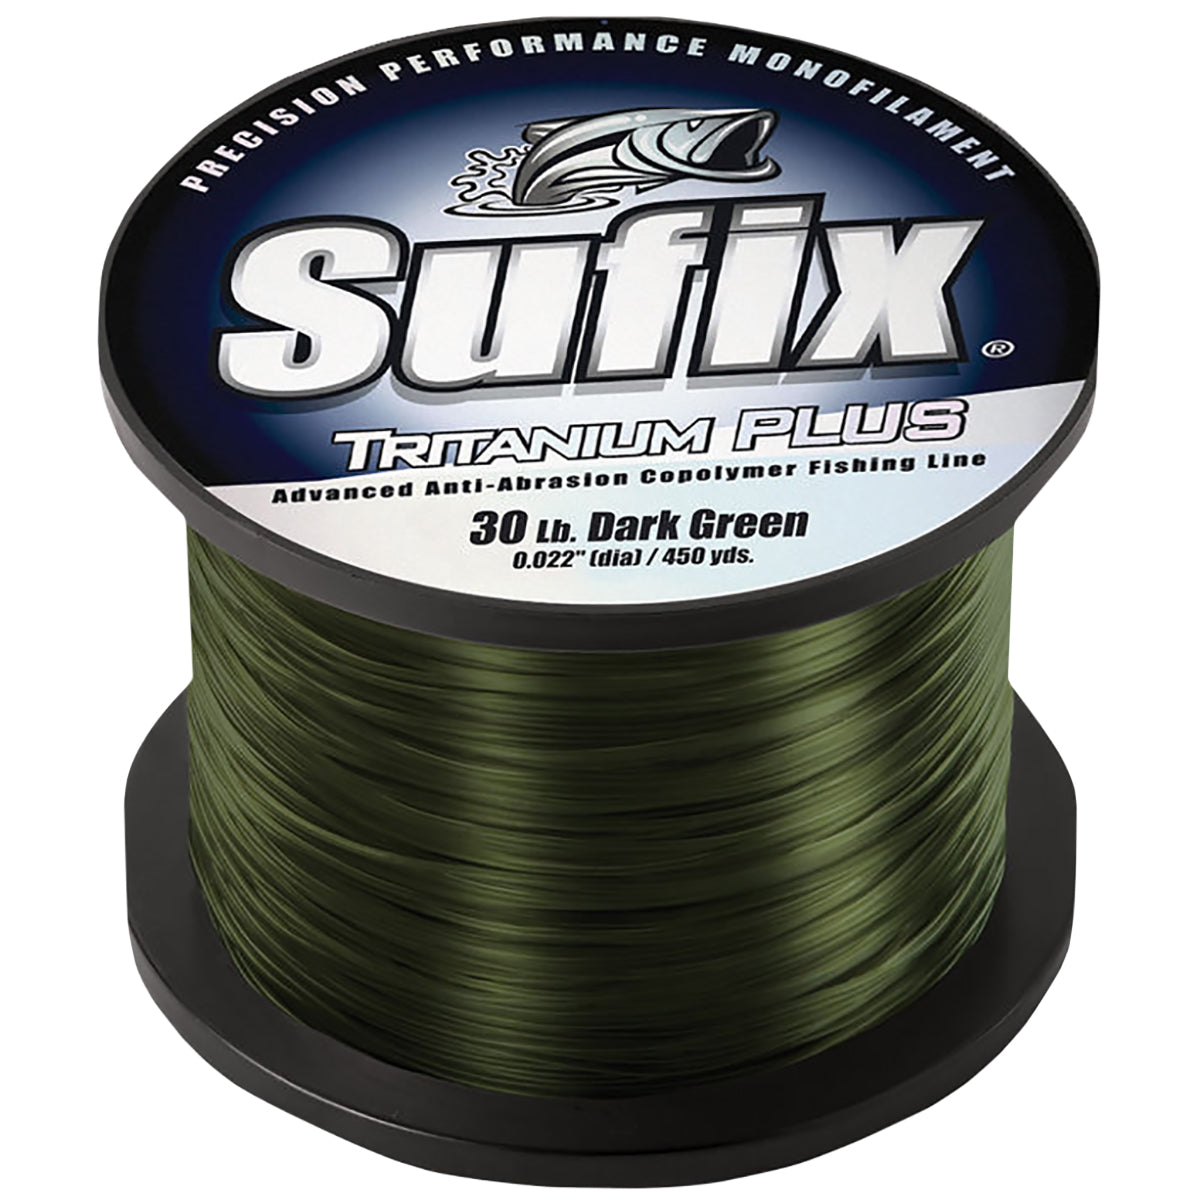 Sufix Tritanium Plus 1/4-Pound Spool Size Fishing Line (Dark Green, 10-Pound)